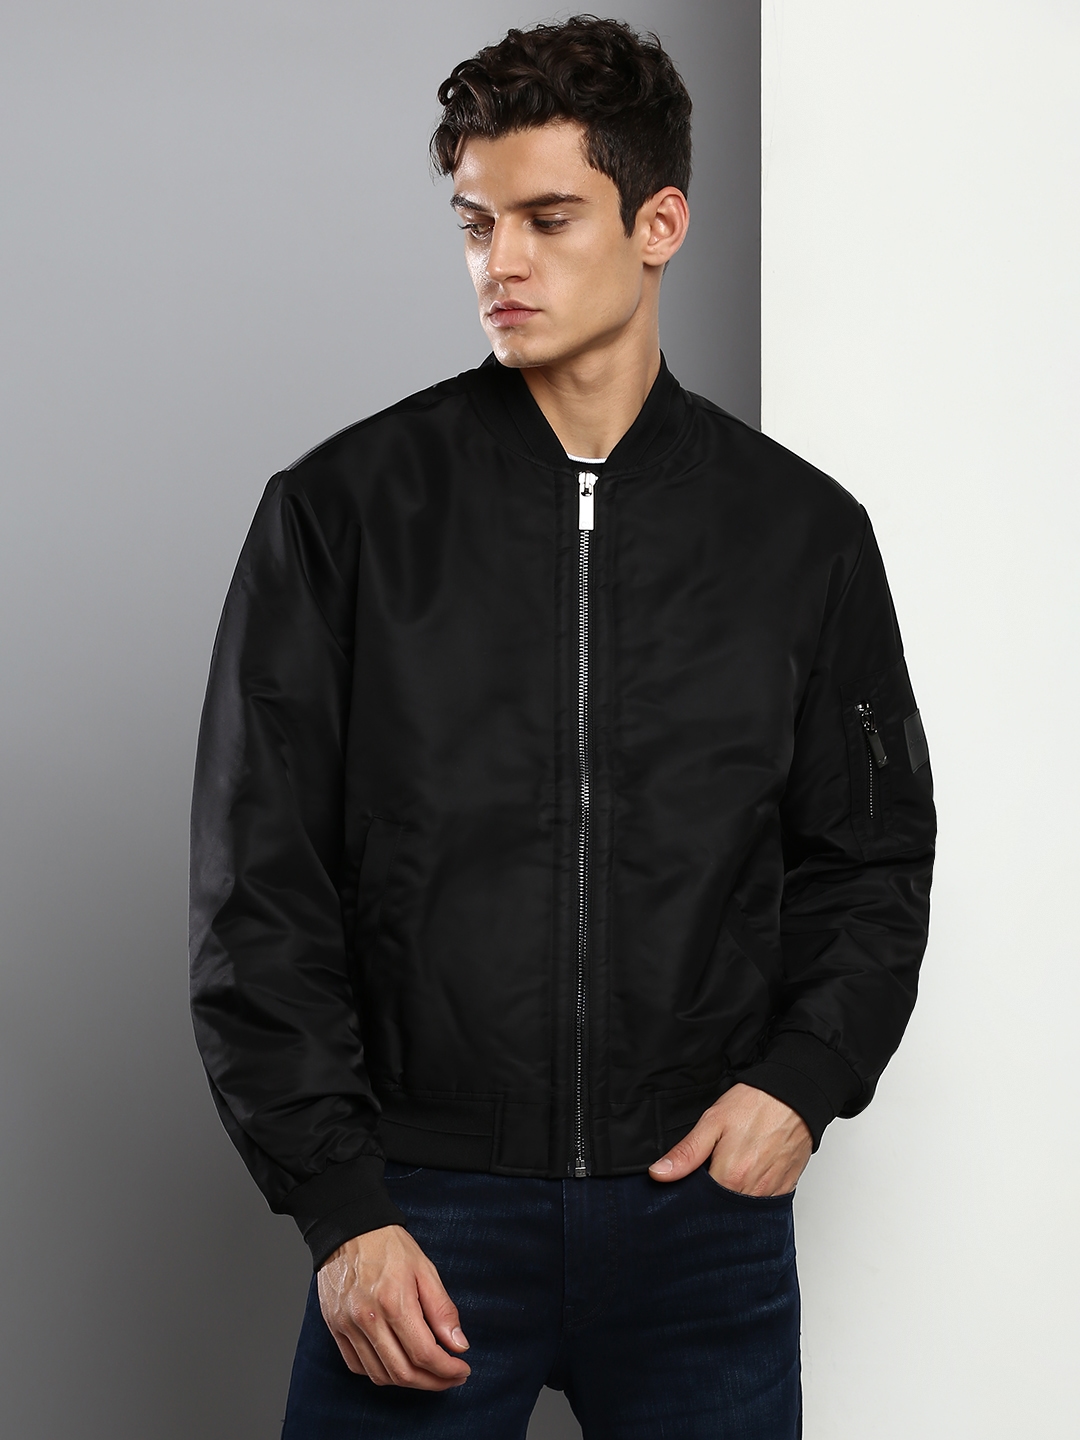 Calvin Klein Jacket - Black - Regular fit - Trendyol-gemektower.com.vn